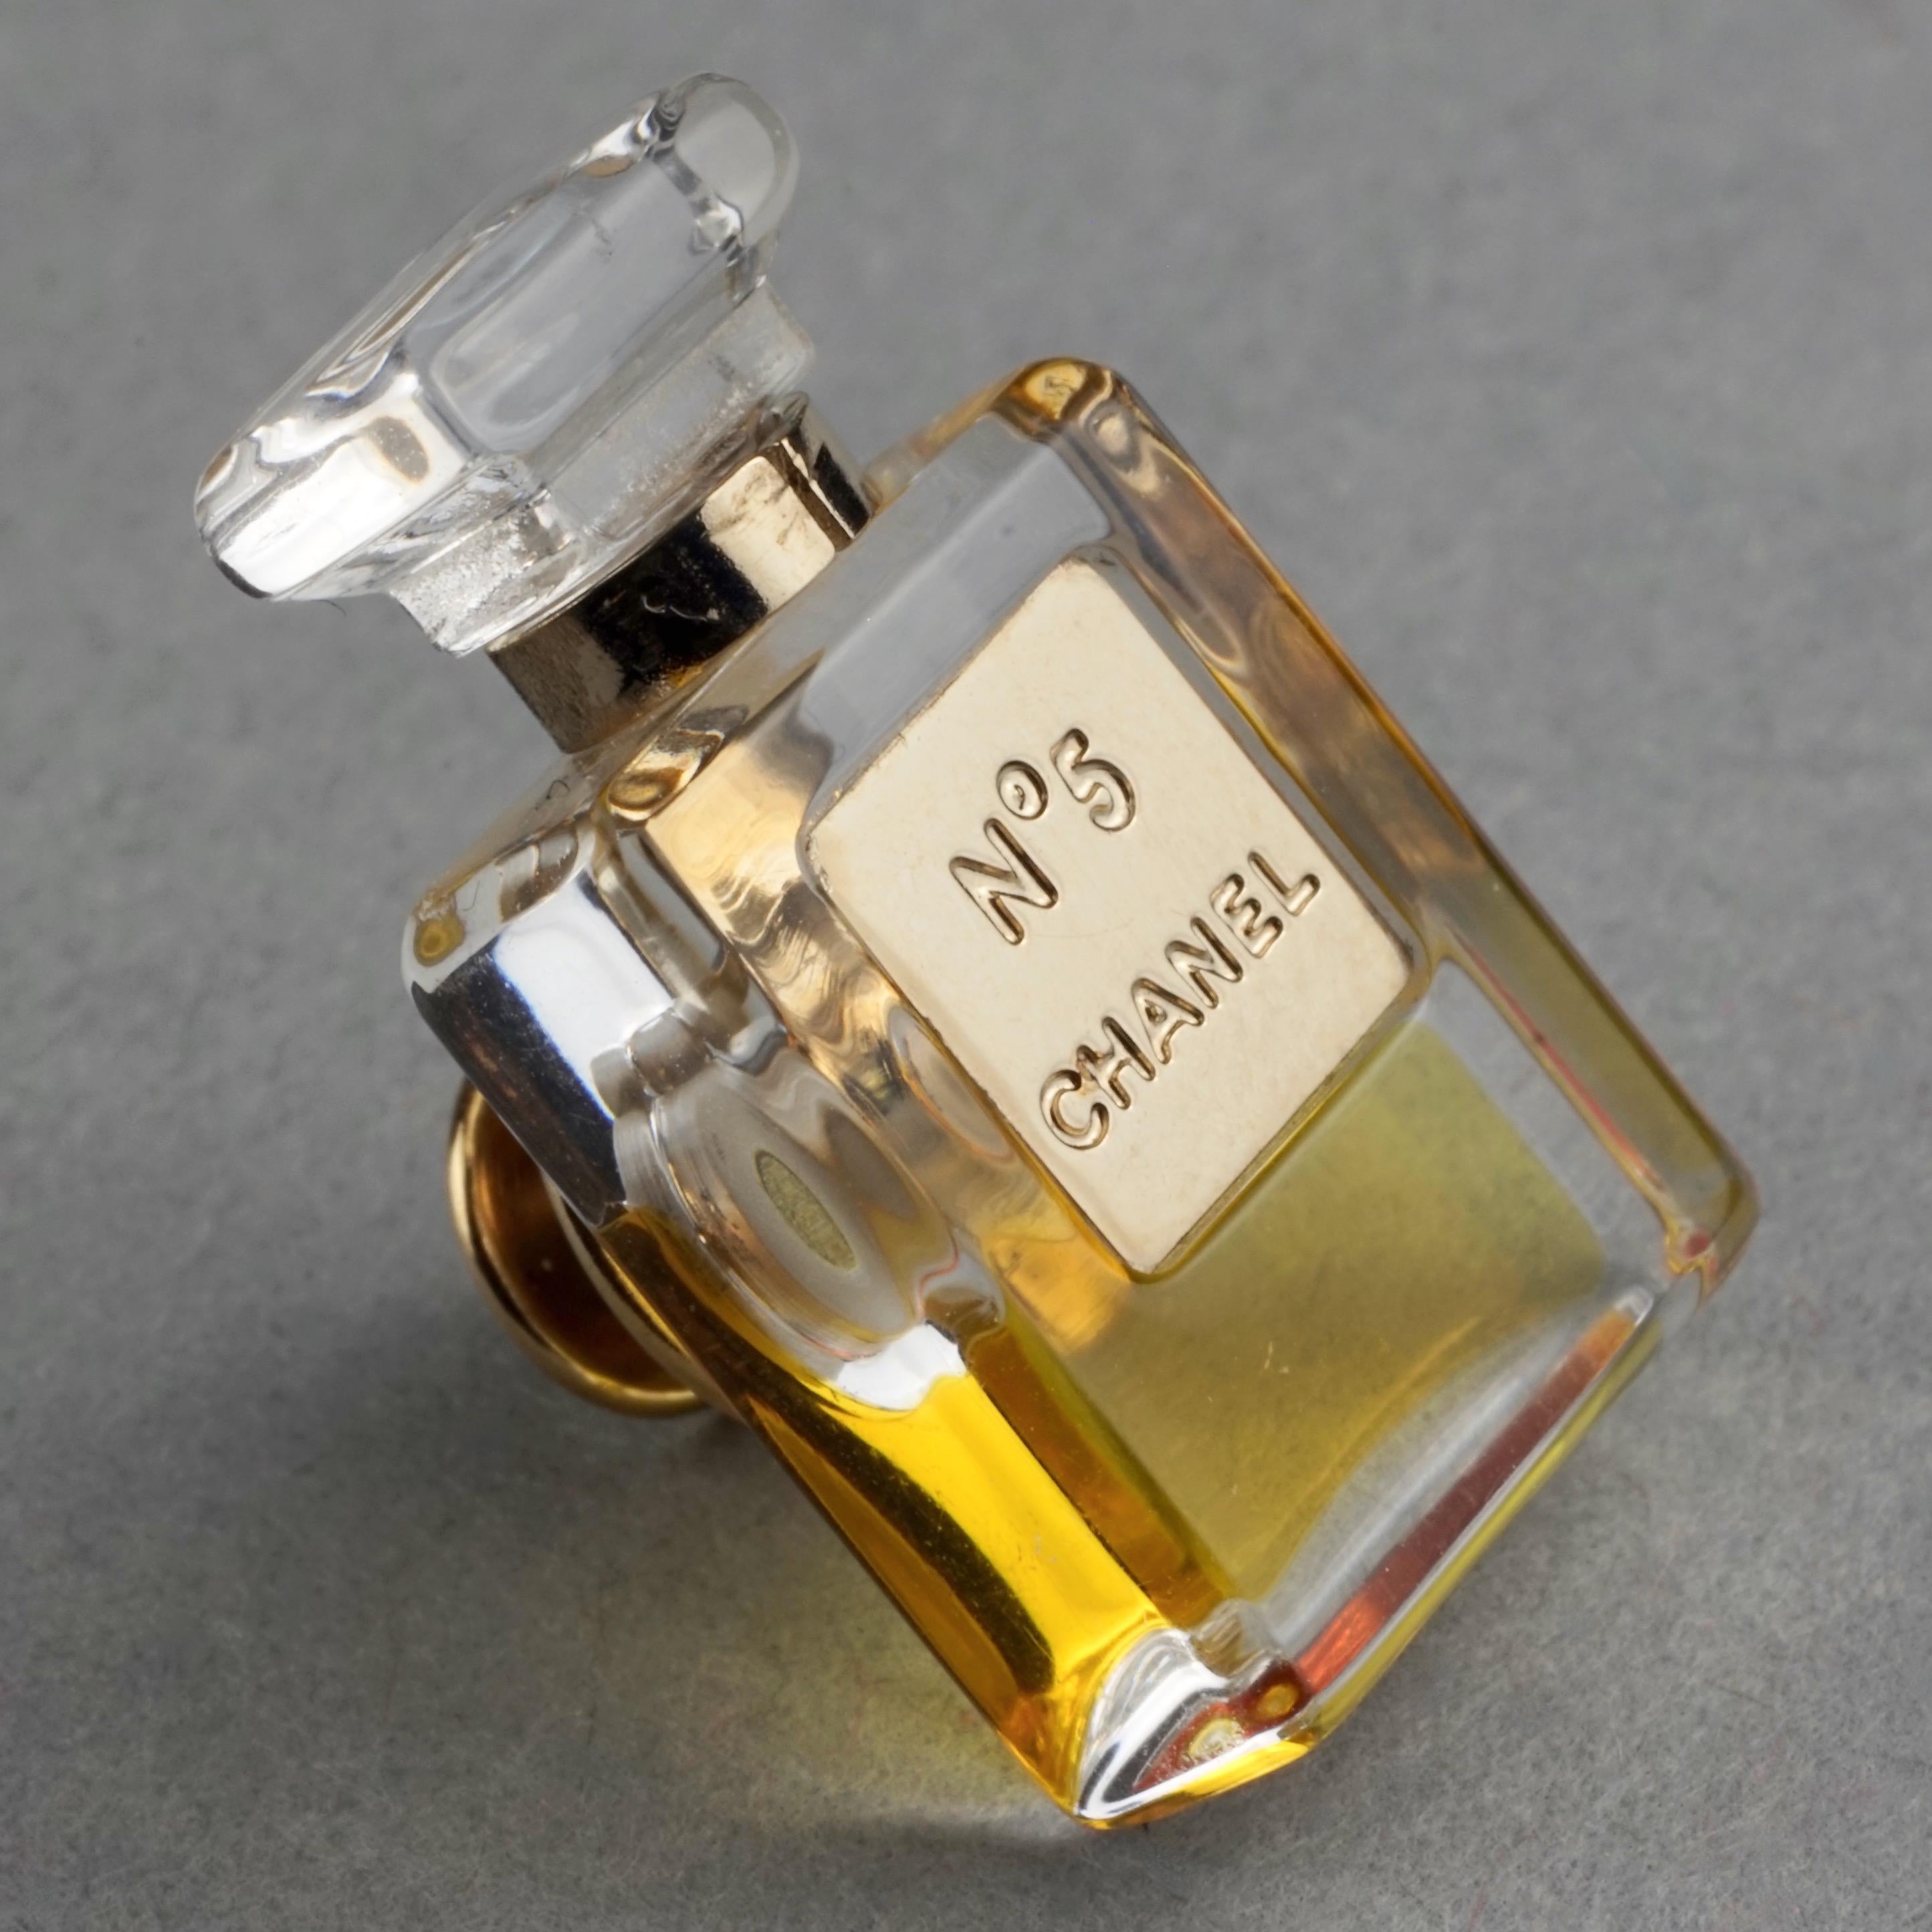 chanel no 5 miniature perfume